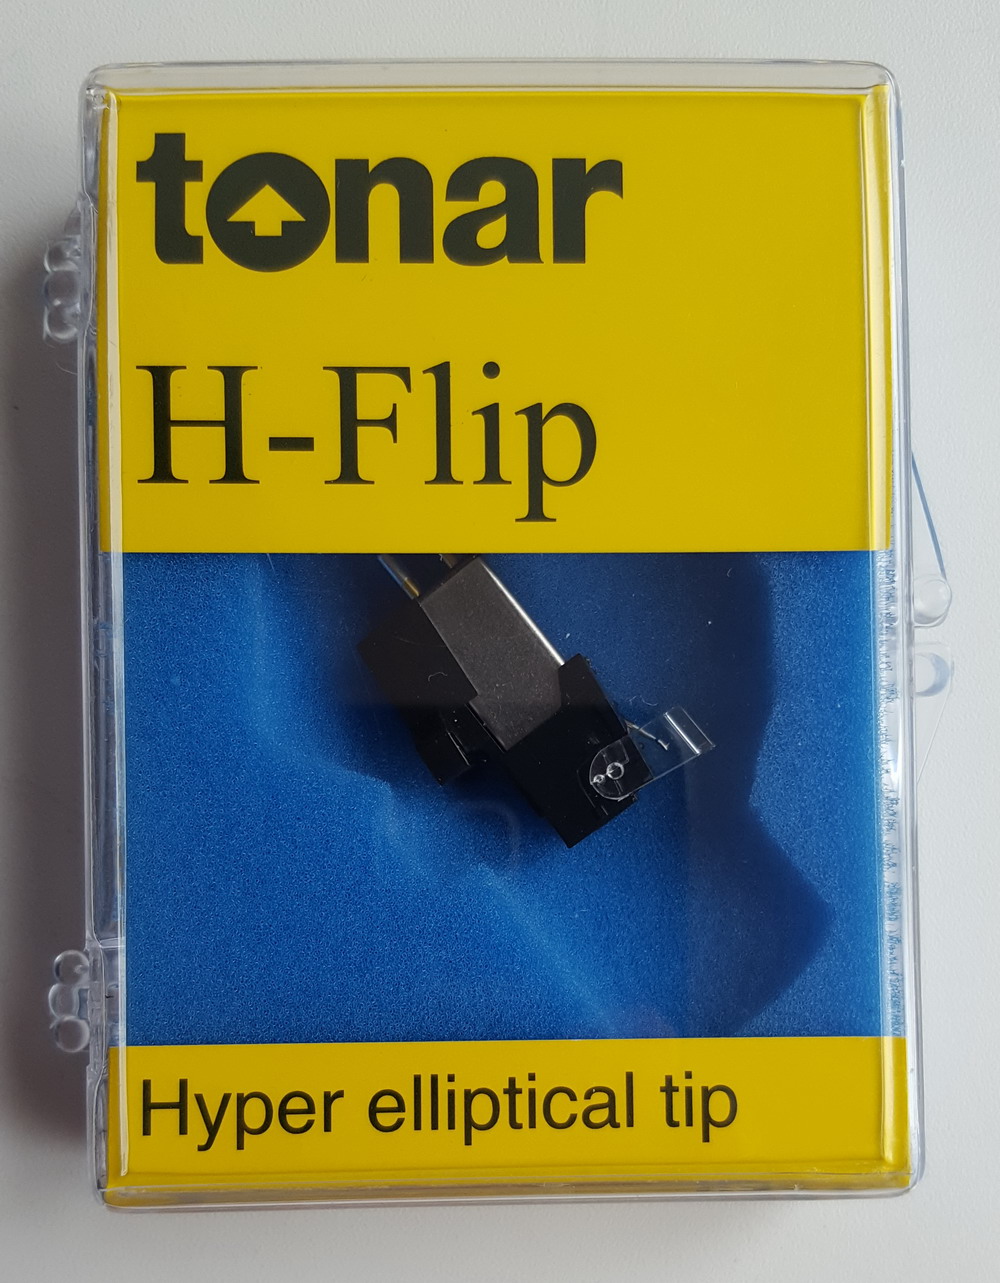  i  :TONAR H-Flip (Hyper elliptical tip), art. 9583